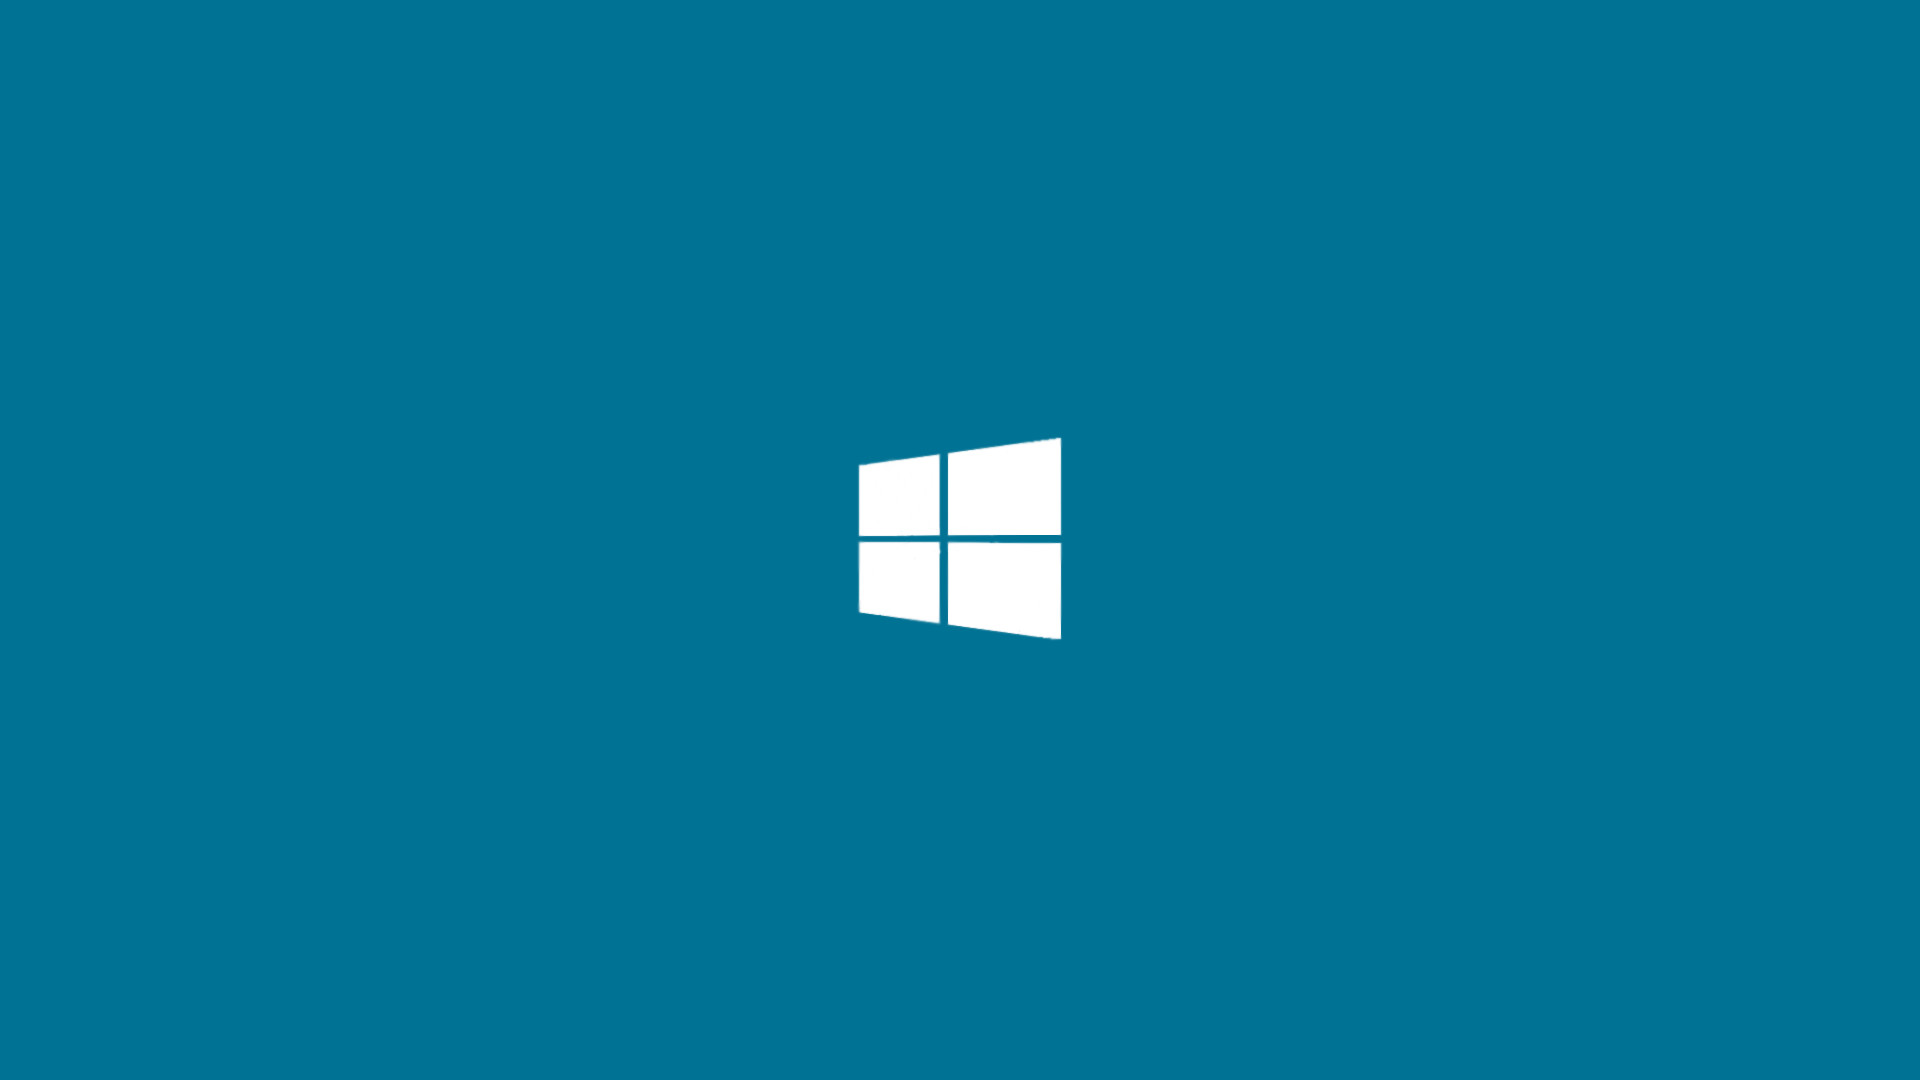 1920x1080 Computer Windows Logo Wallpapers, Desktop Backgrounds  px